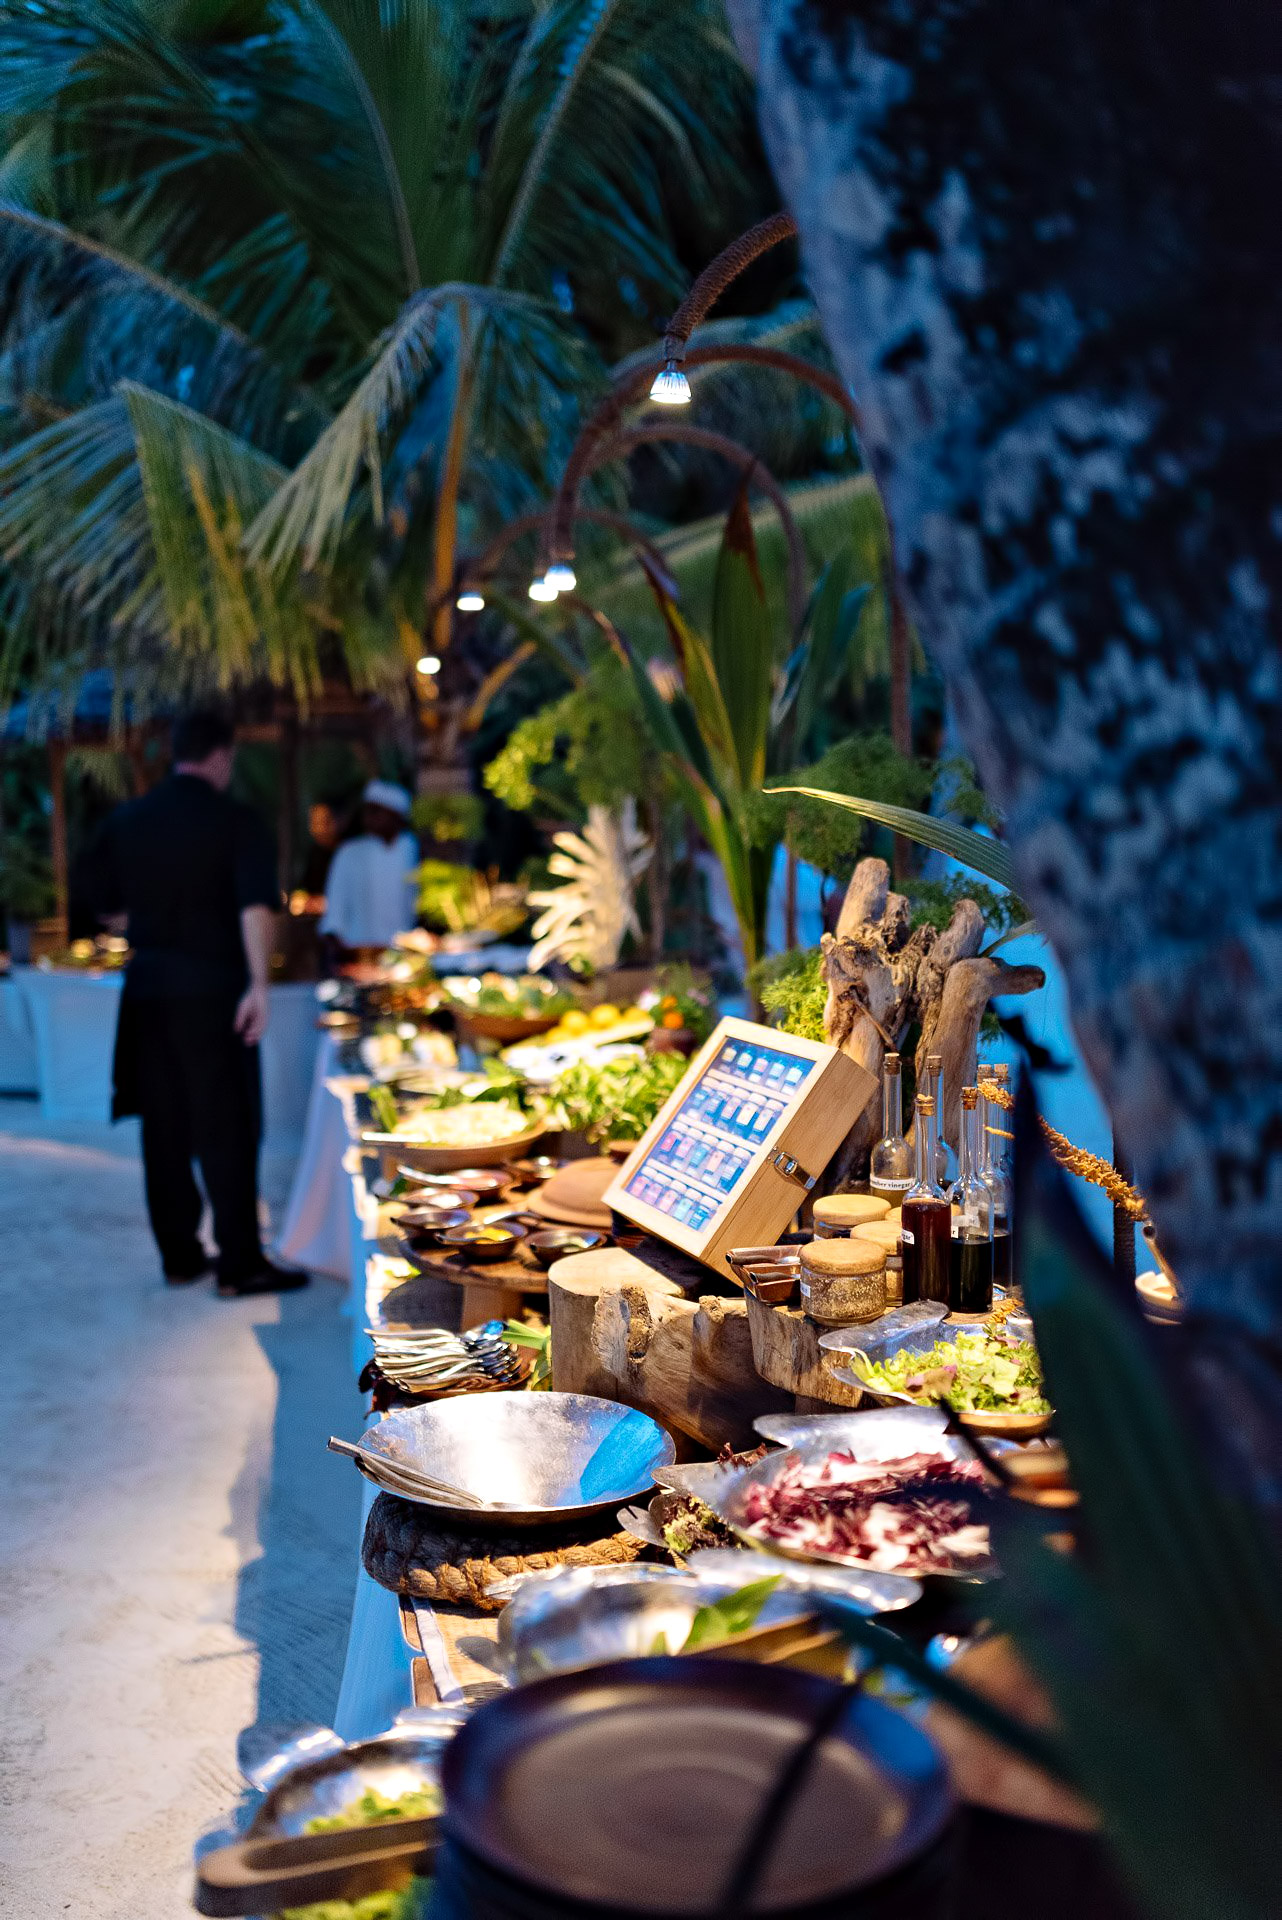 Gili Lankanfushi Resort - North Male Atoll, Maldives - European Maldivian Fusion Food Fare